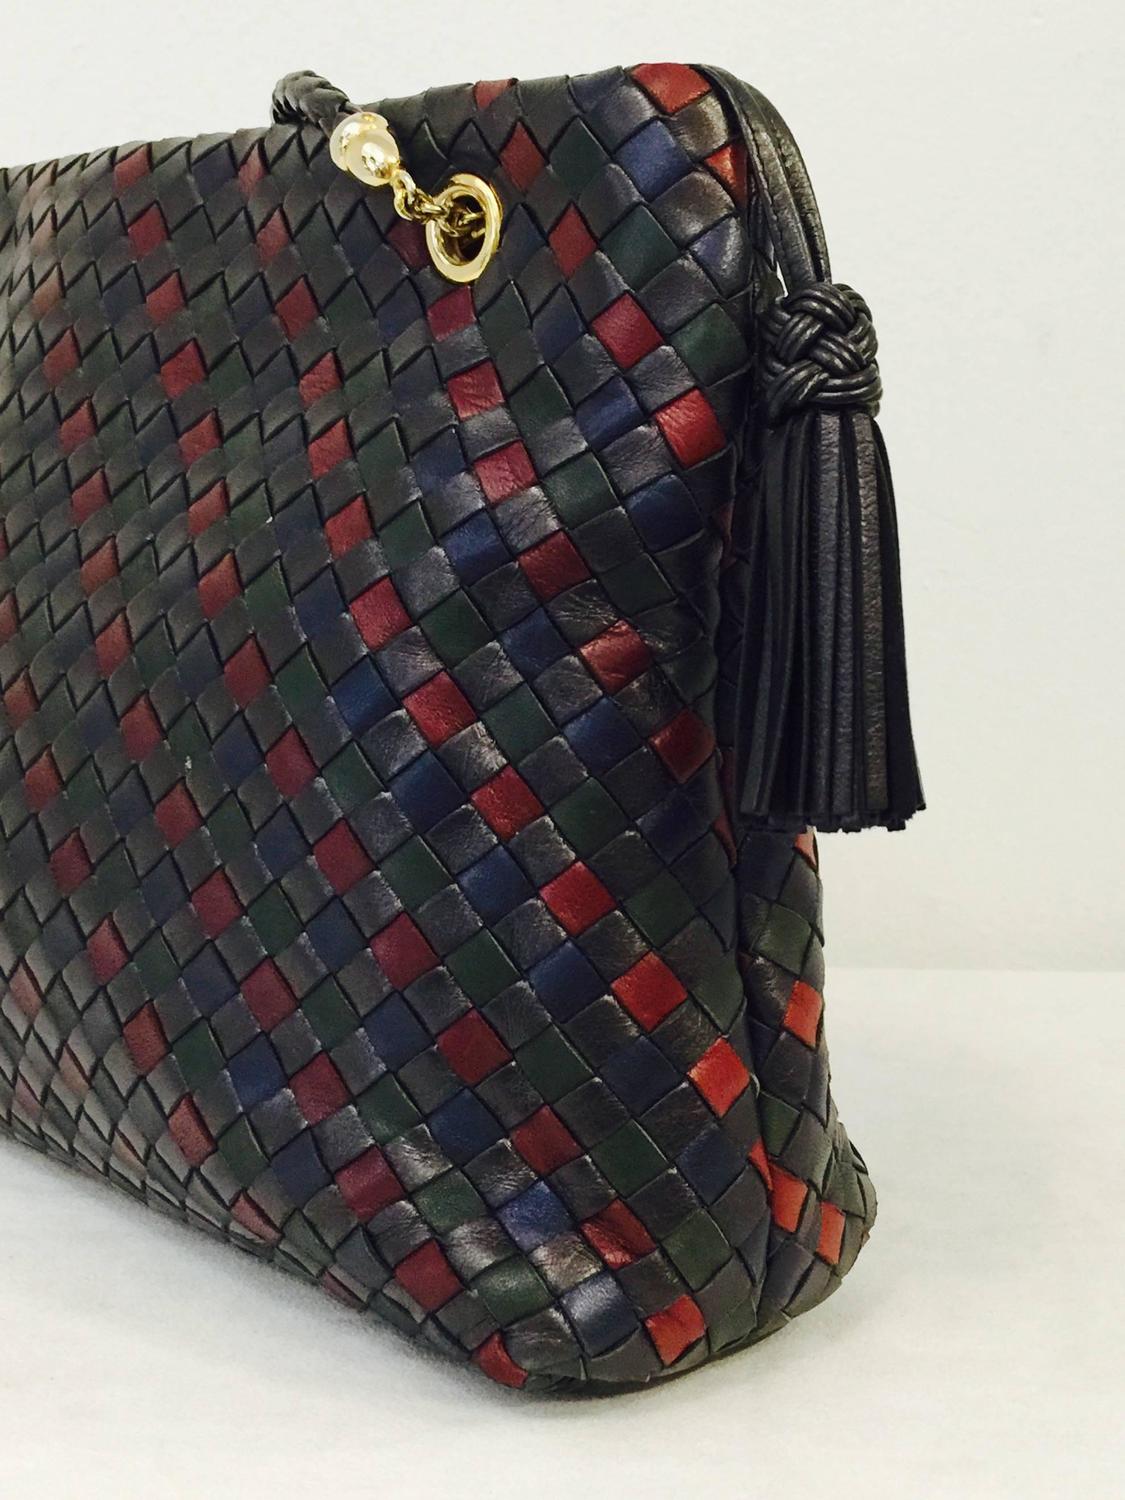 Bottega Veneta Mutli Color Shoulder Bag With Tassel Pull at 1stdibs